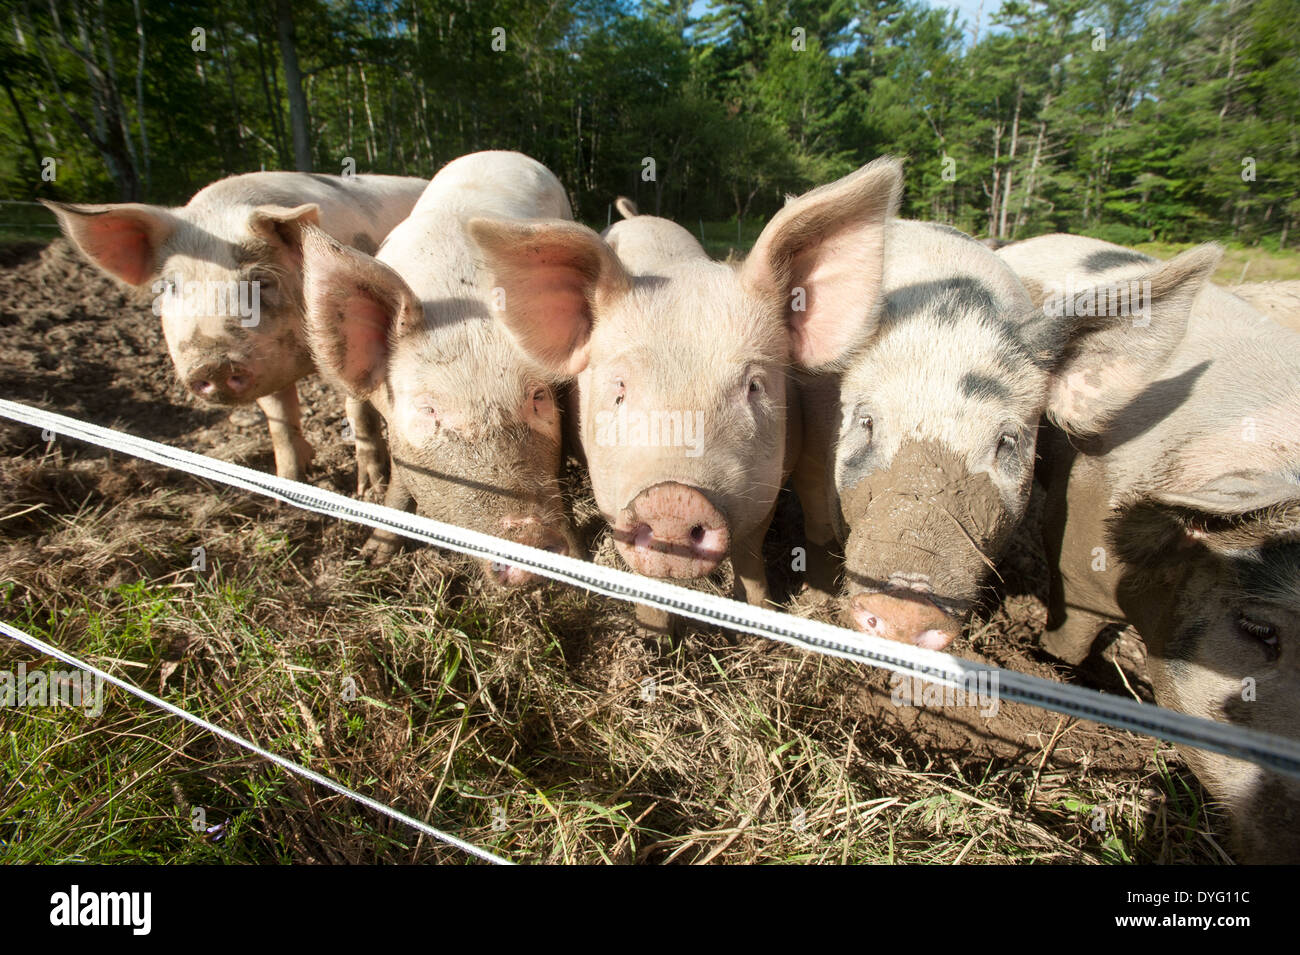 Group of pigs Lisbon Falls, ME Stock Photo